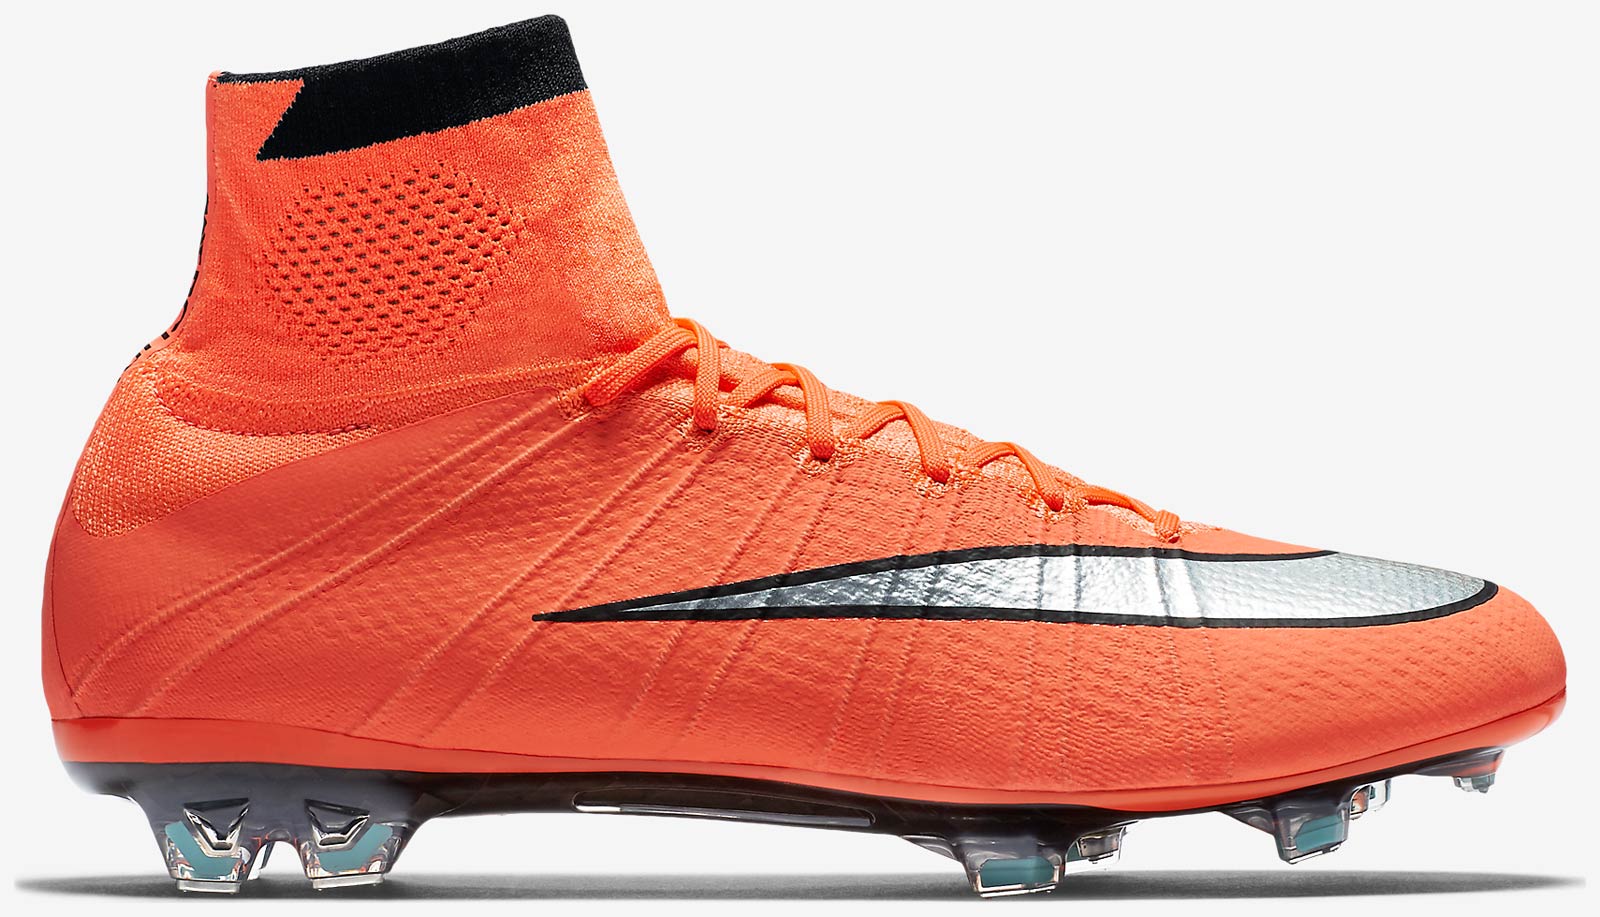 Mango Nike Mercurial 2016 Football Boots Released - Footy